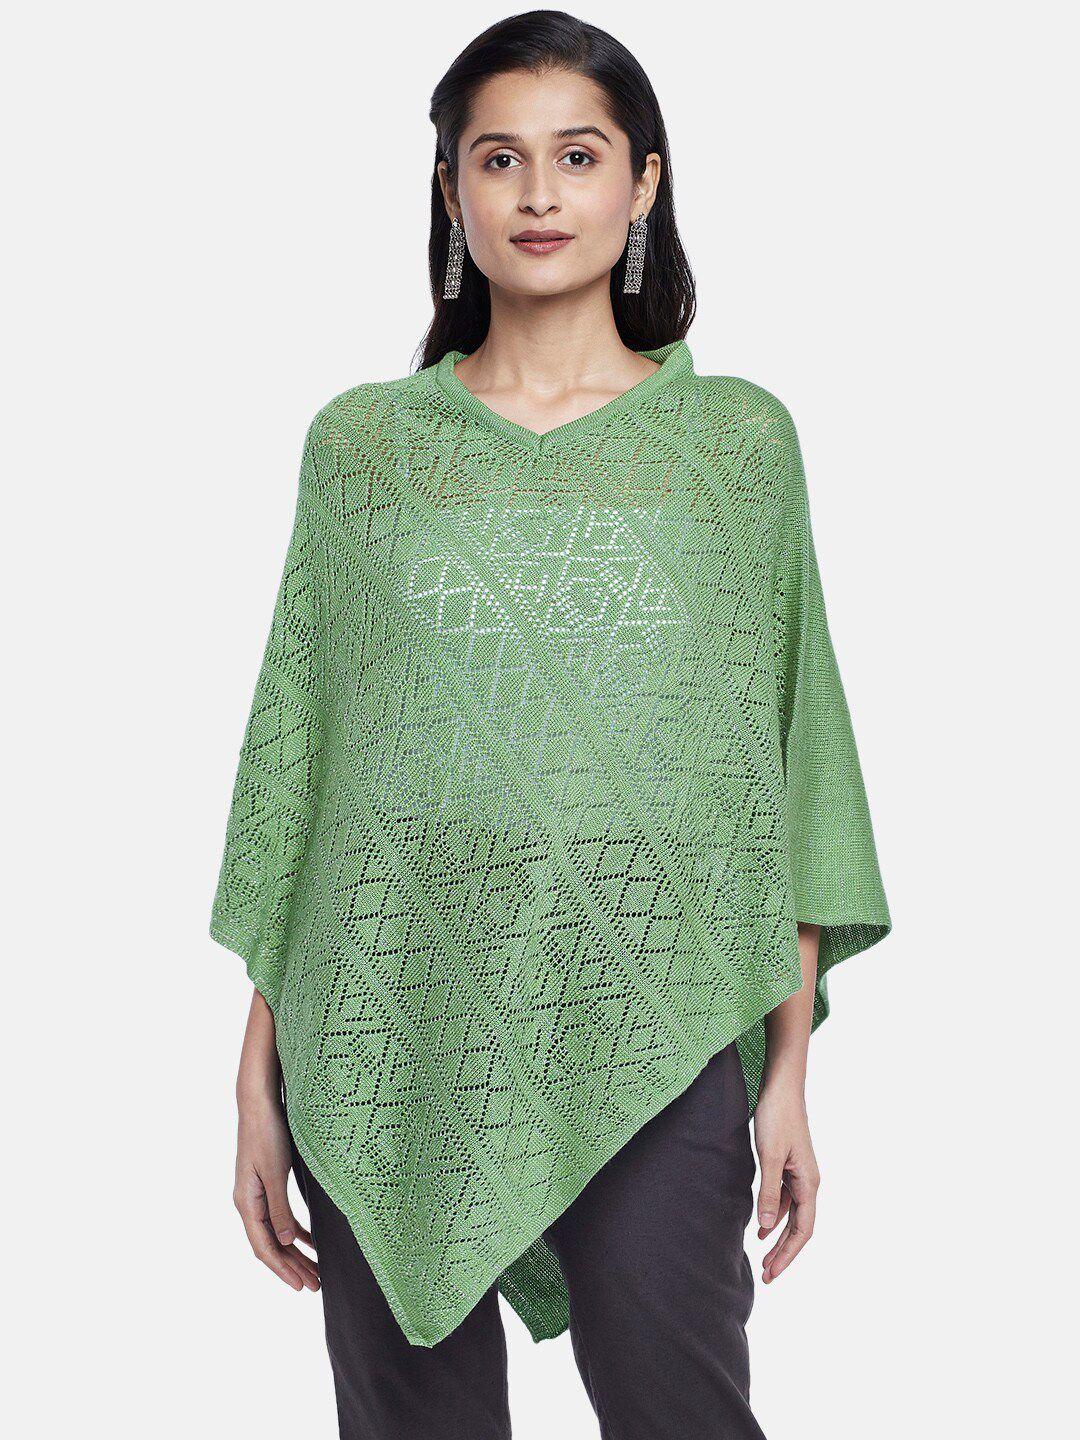 akkriti by pantaloons women green open knit fusion poncho